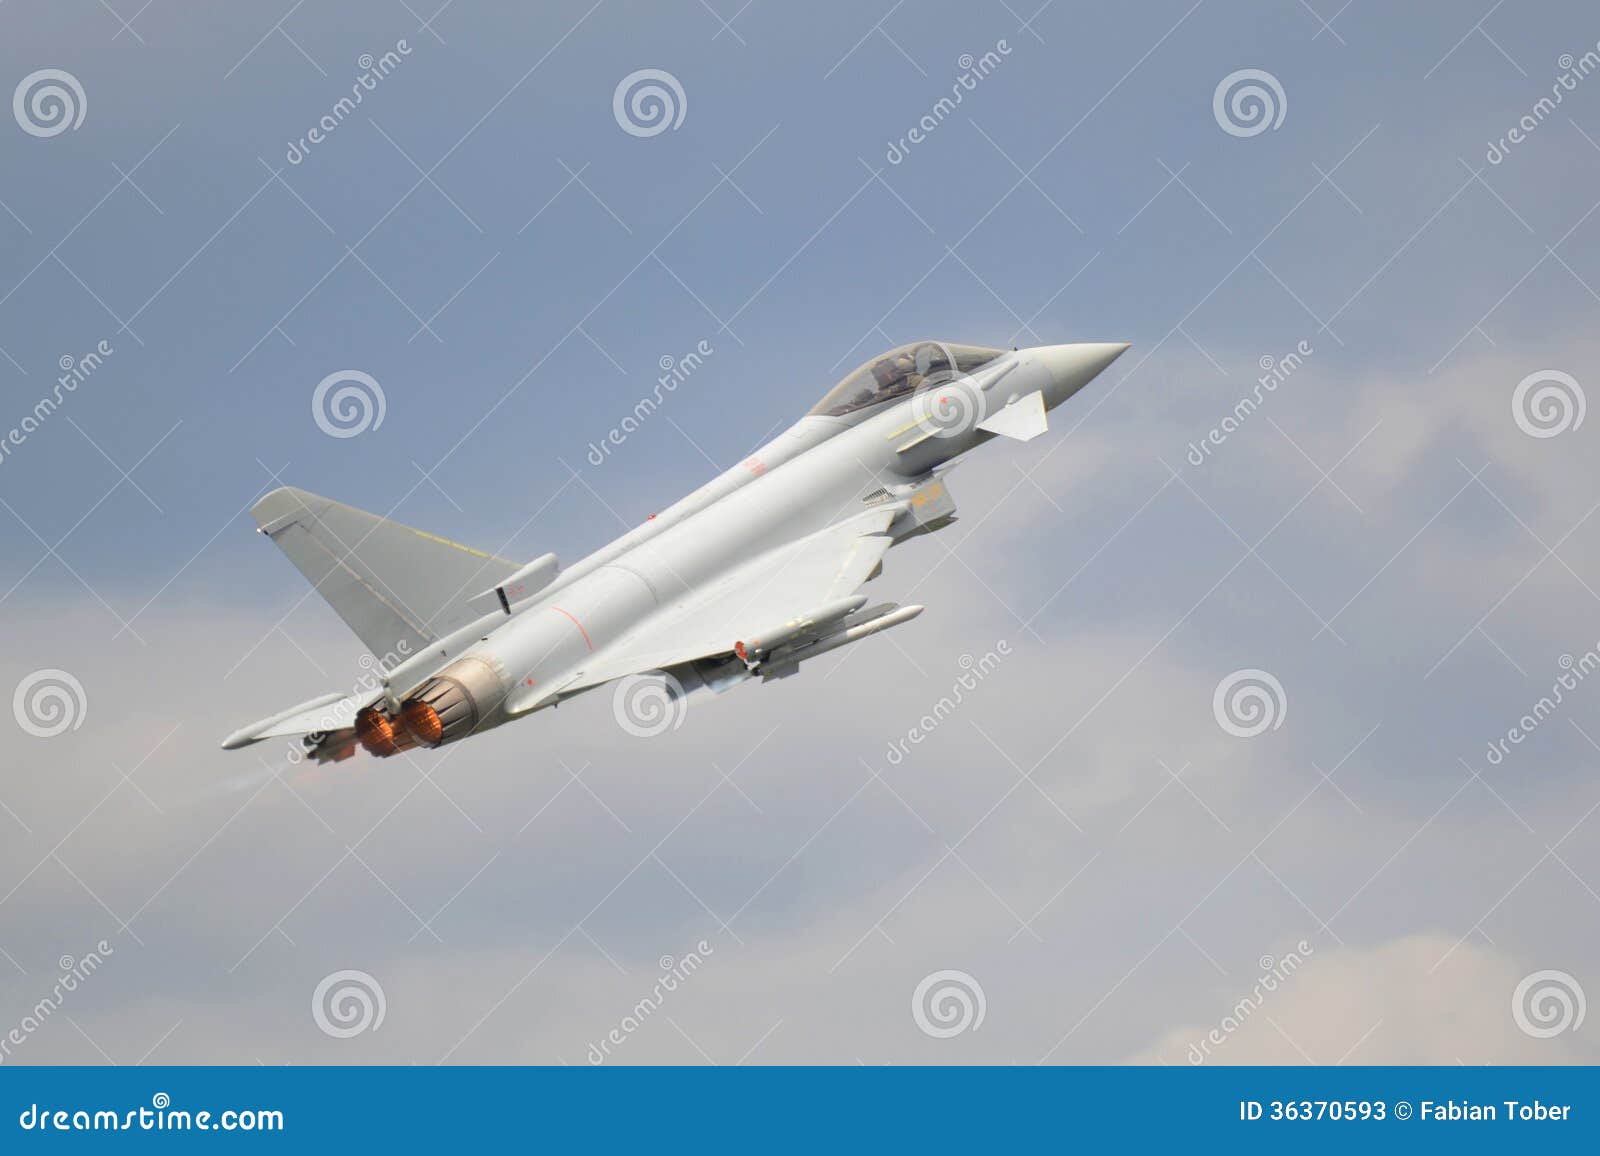 eurofighter clipart - photo #18